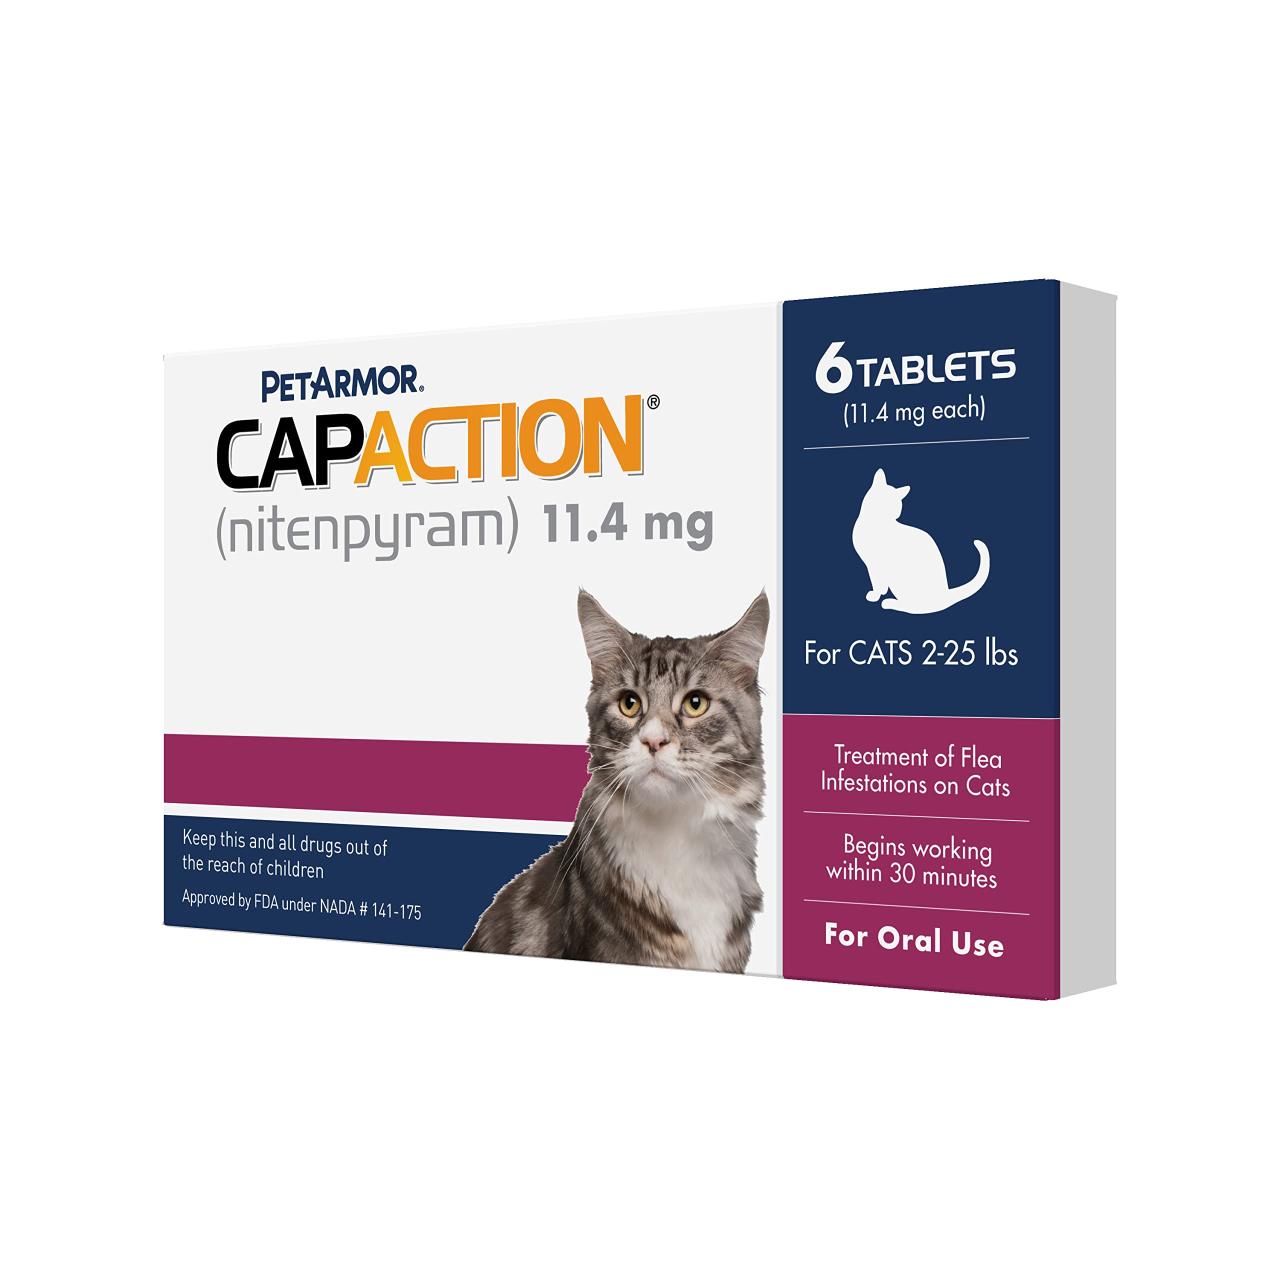 Amazon.Com : Petarmor Capaction (Nitenpyram) Oral Flea Treatment For Cats,  Fast Acting Tablets Start Killing Fleas In 30 Minutes, Cats 2-25 Lbs, 6  Doses : Pet Supplies